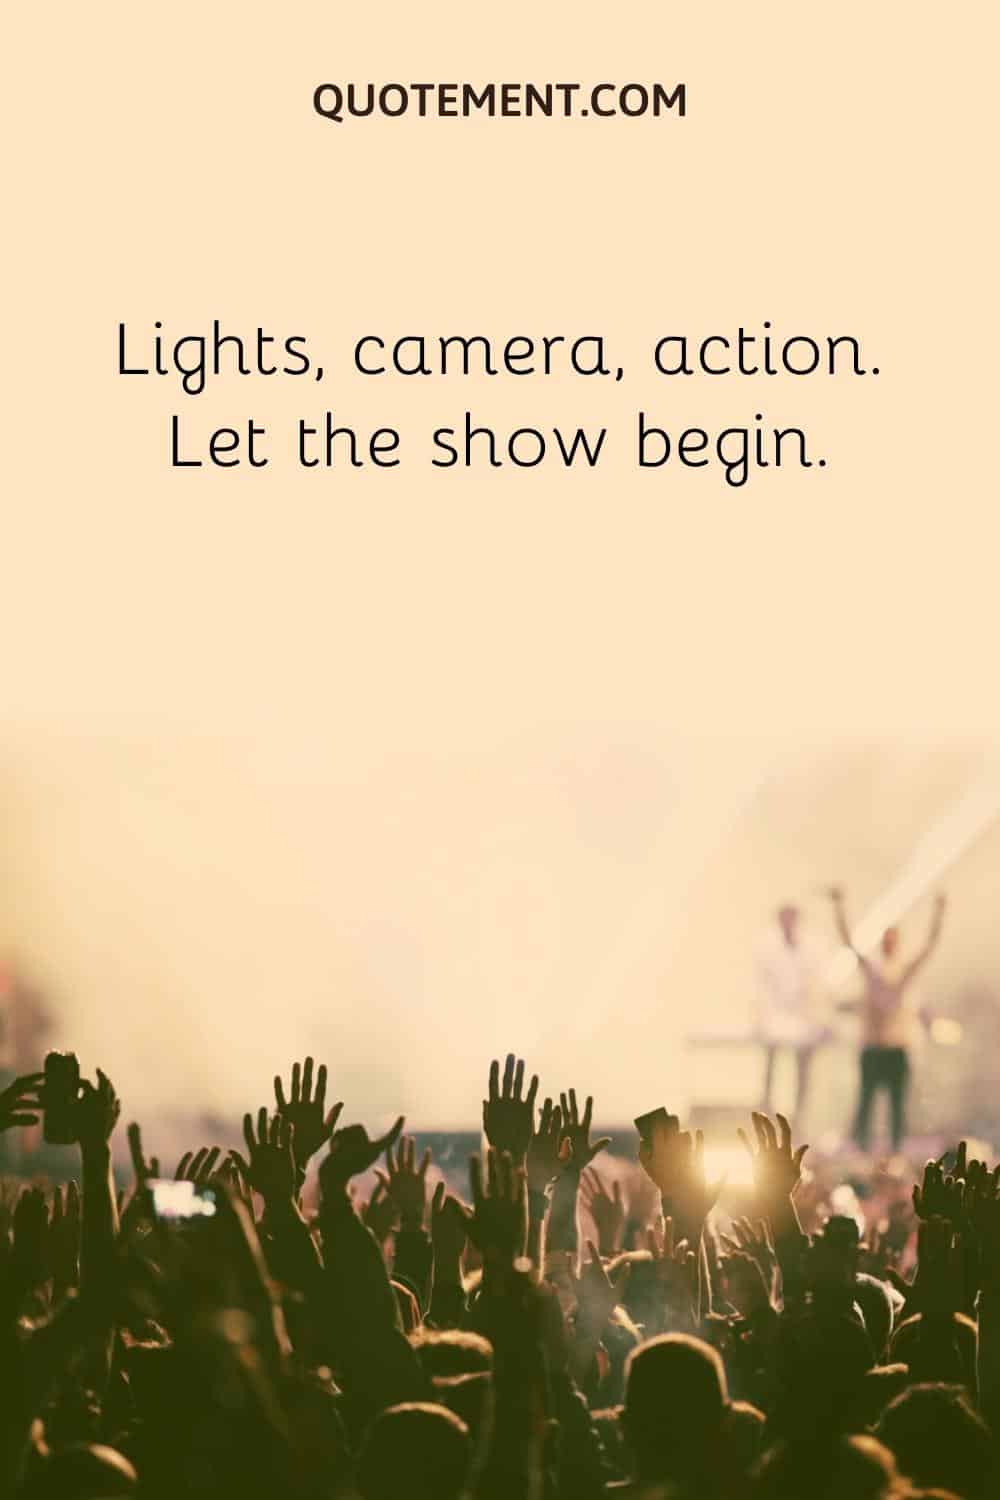 Lights, camera, action. Let the show begin